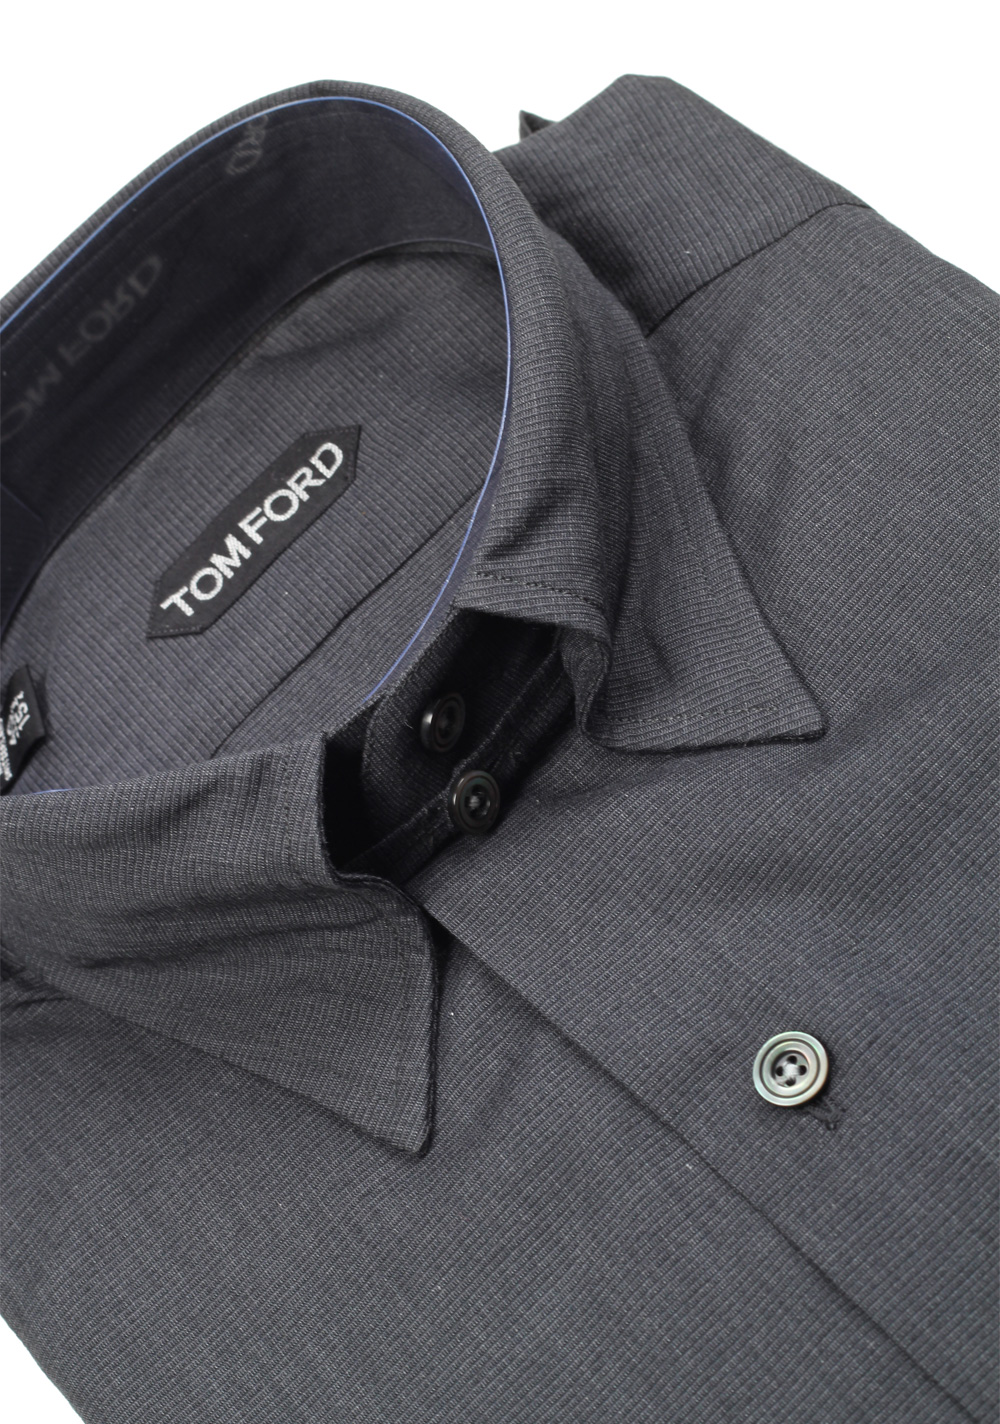 TOM FORD Solid Gray High Collar Dress Shirt Size 40 / 15,75 U.S. | Costume Limité